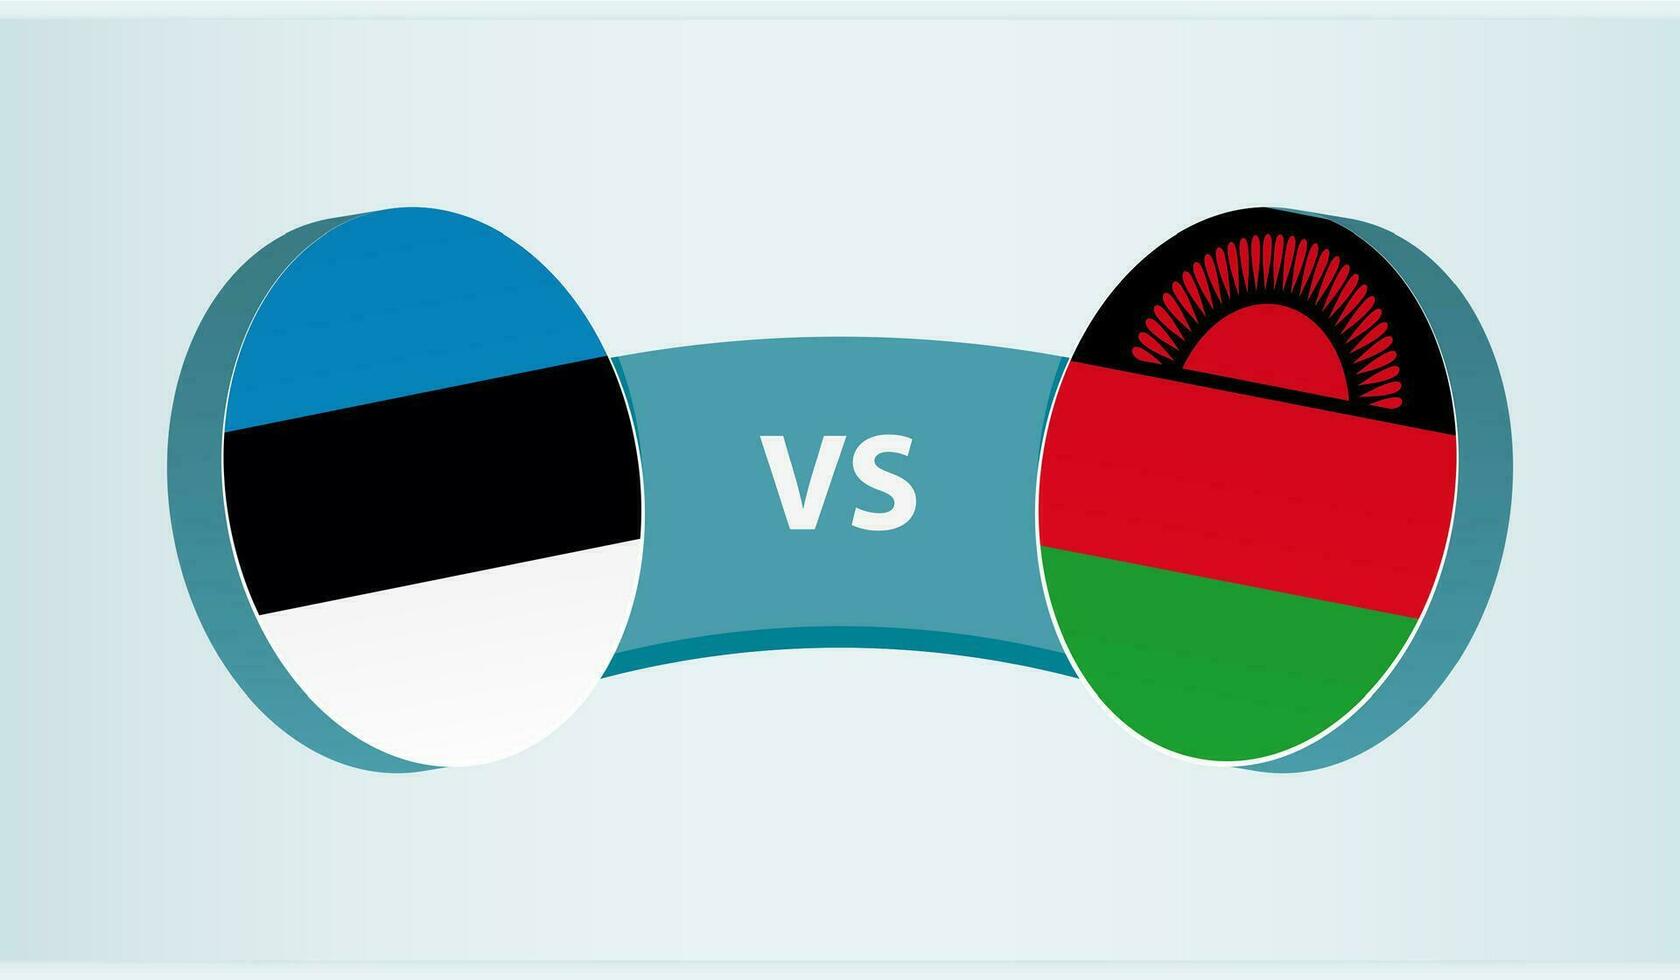 estland mot Malawi, team sporter konkurrens begrepp. vektor